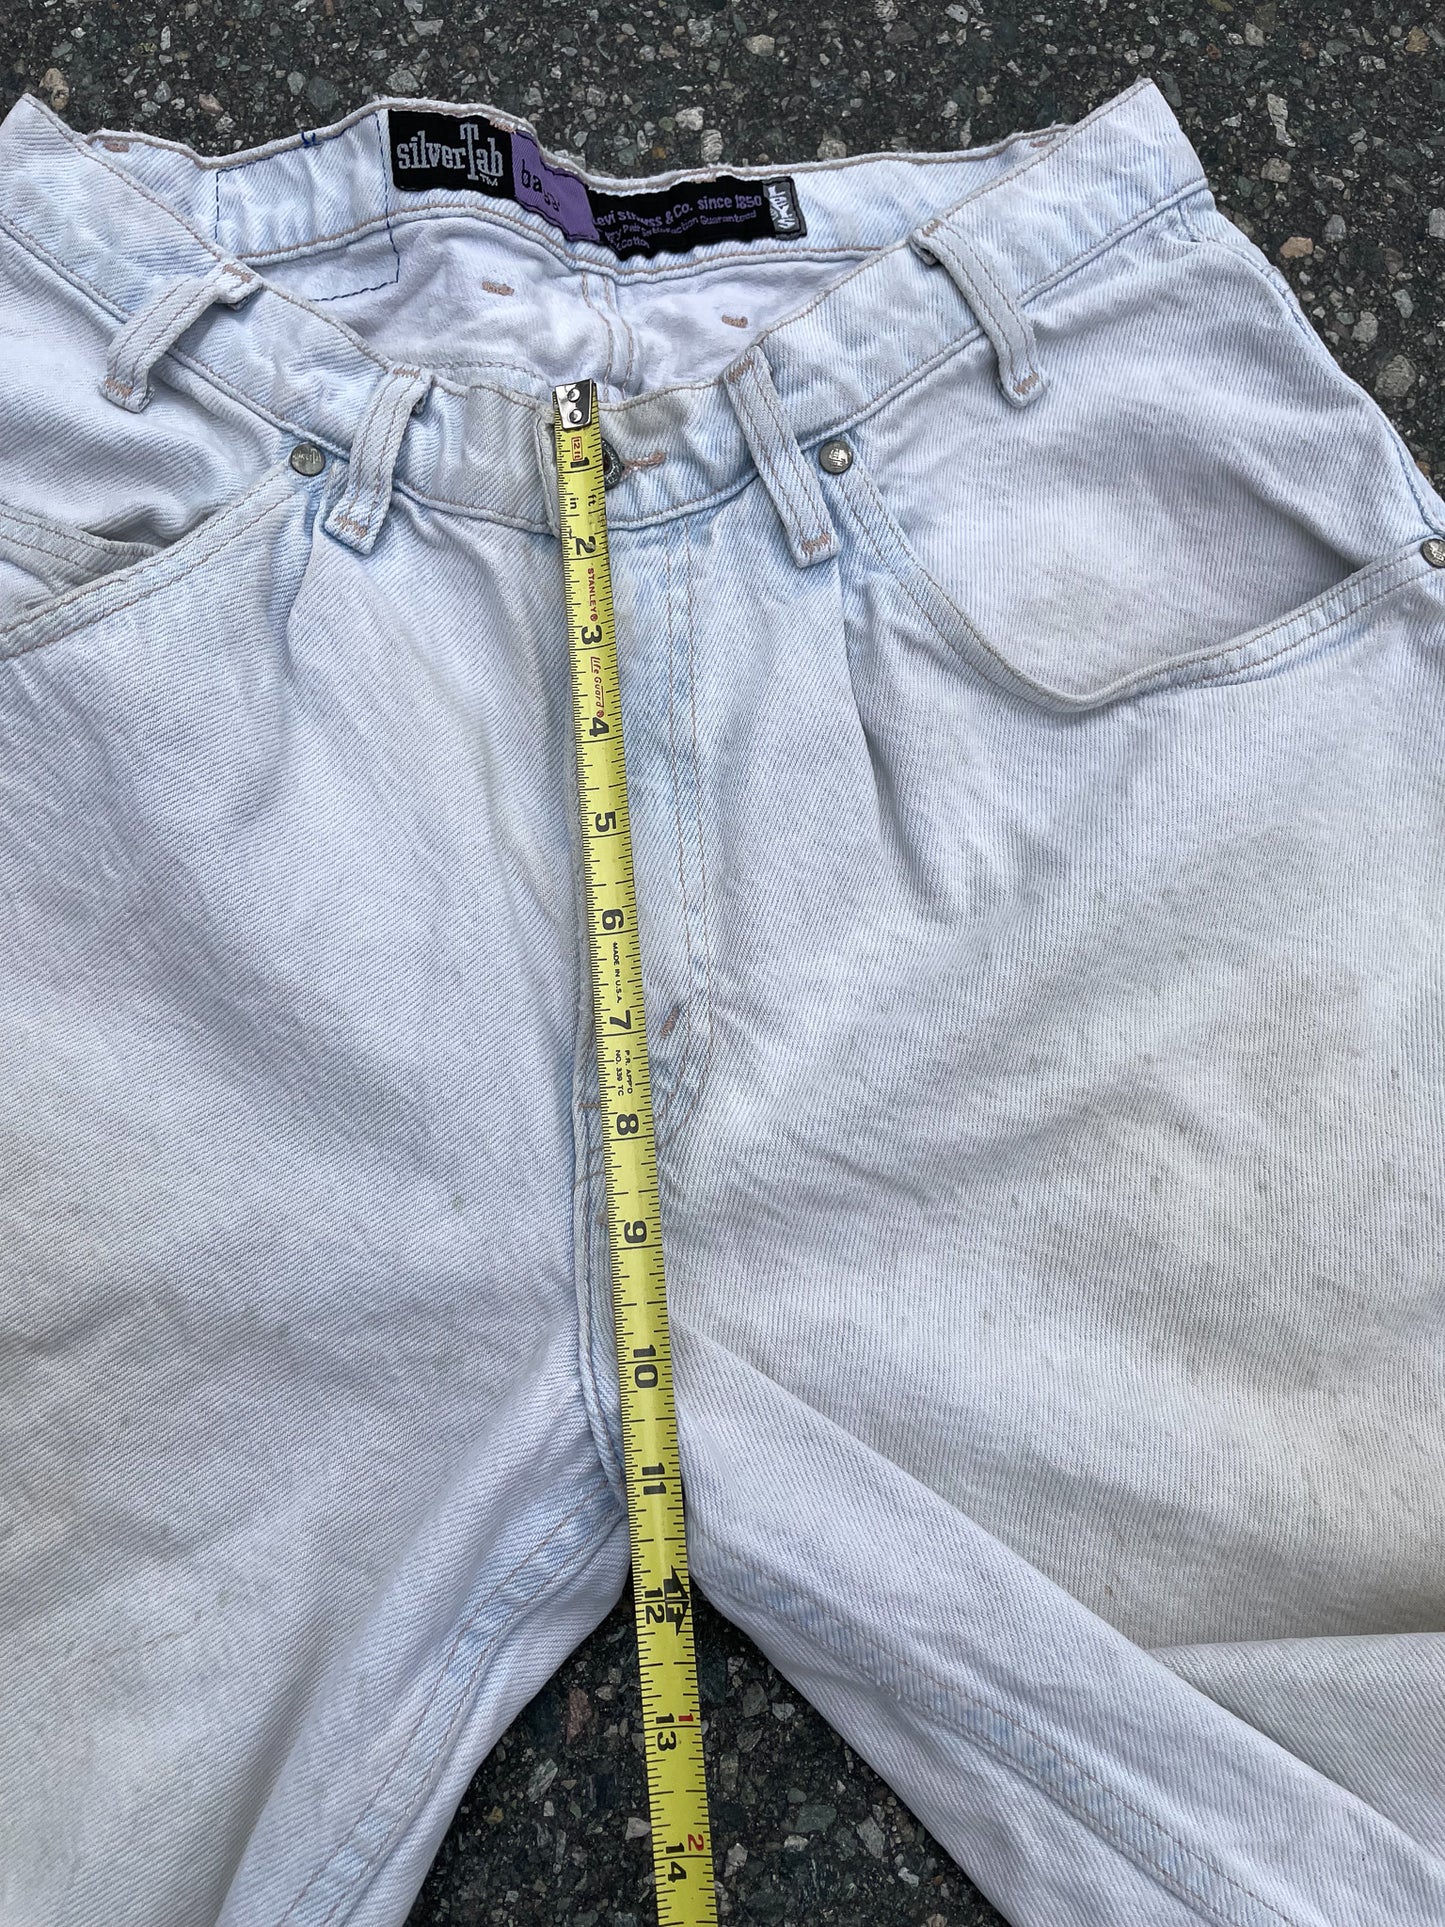 Levi's Silvertab Baggy Cutoff Jean Shorts—[30]